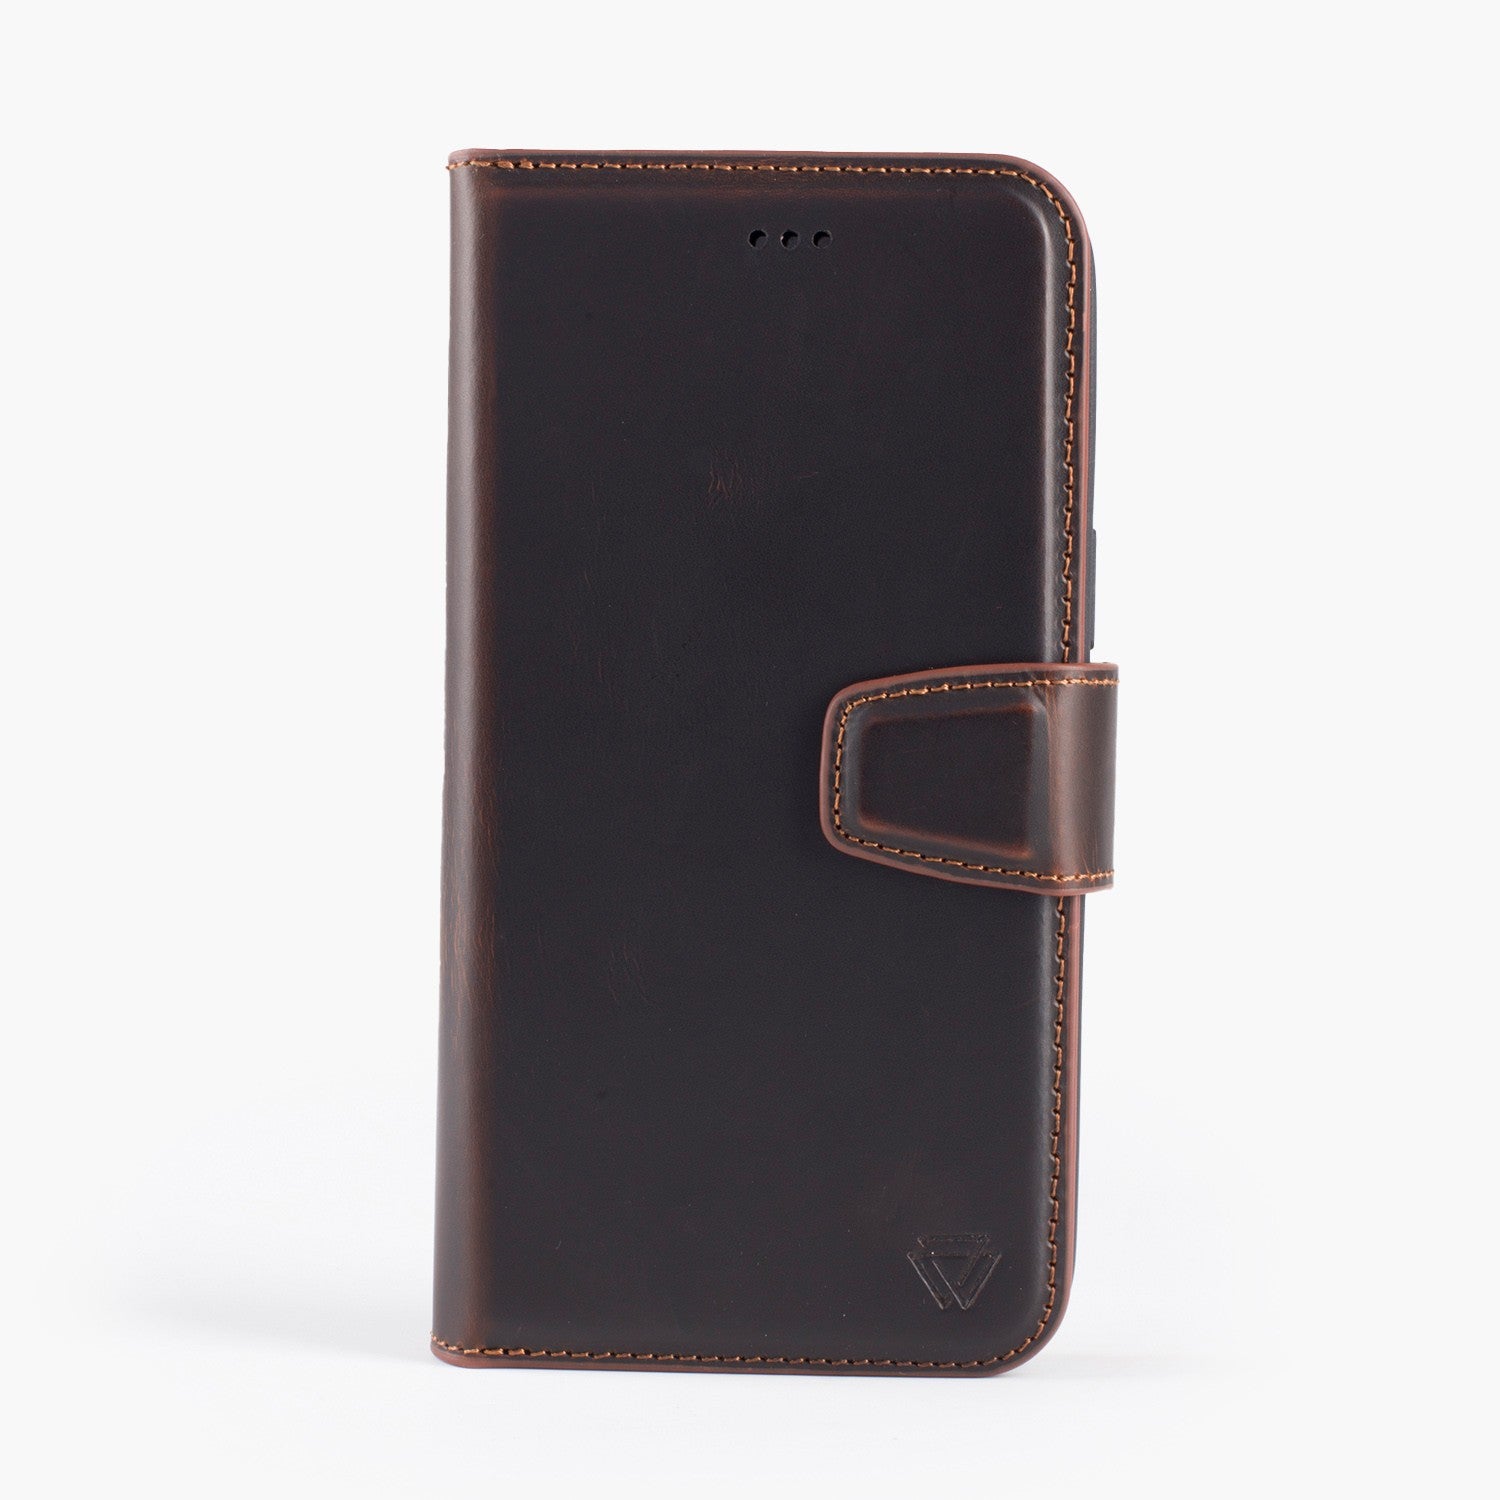 Wachikopa leather Magic Book Case 2 in 1 for iPhone 11 Pro Dark Brown